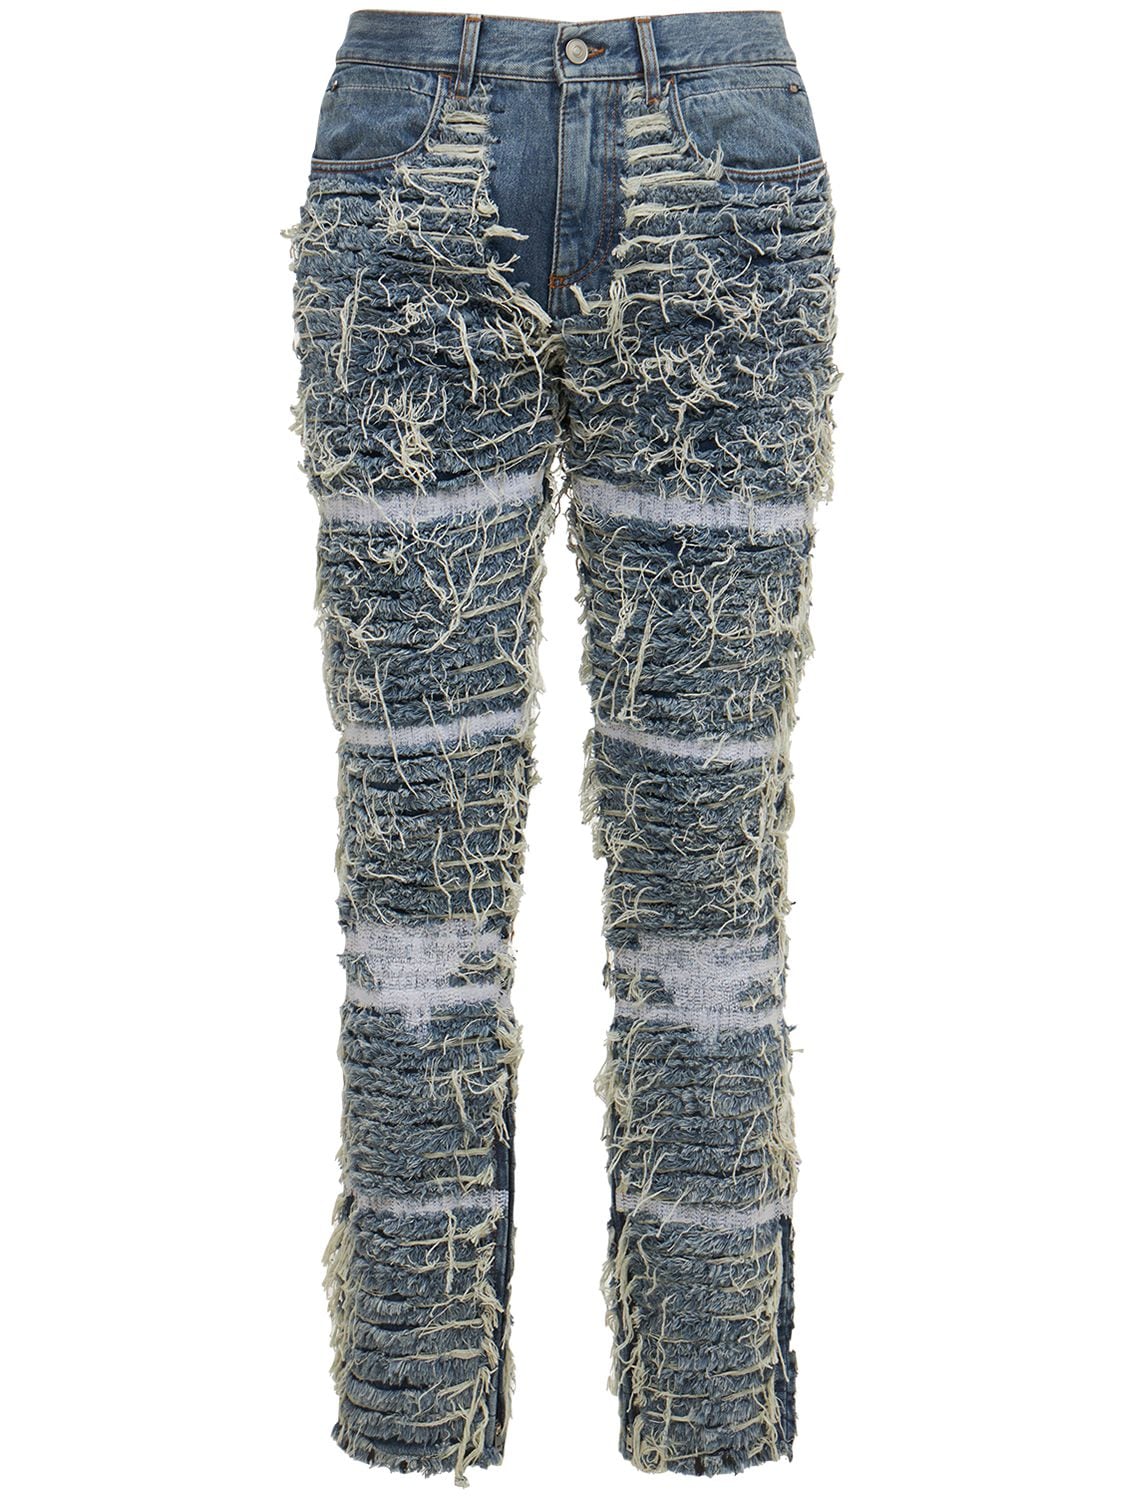 1017 ALYX 9SM Blackmeans Cotton Denim Jeans メンズ